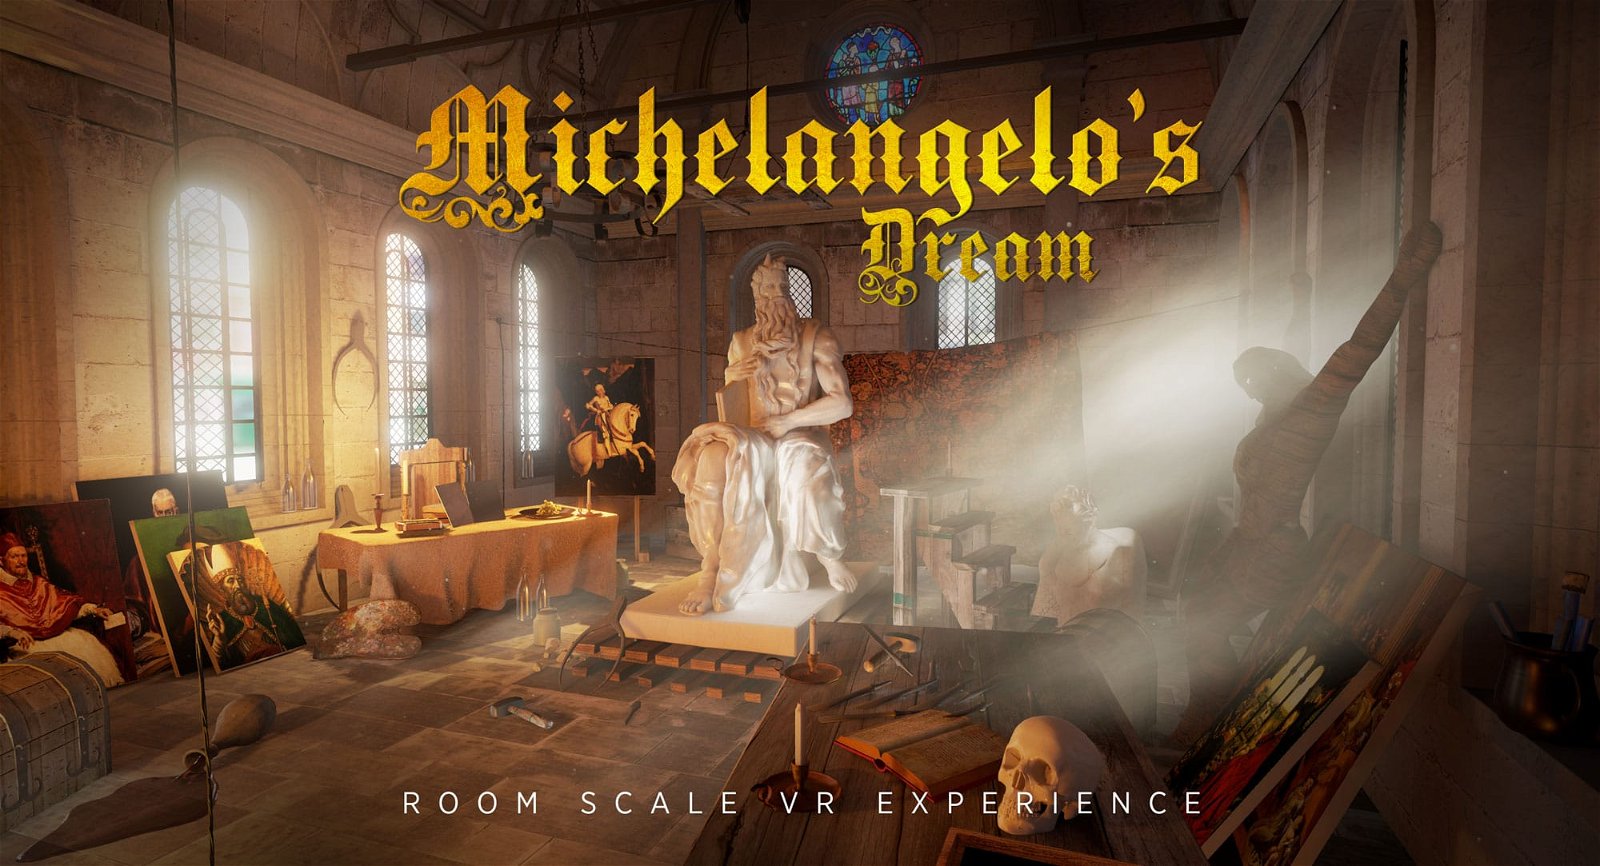 Michelangelo’s Dream VR Experience